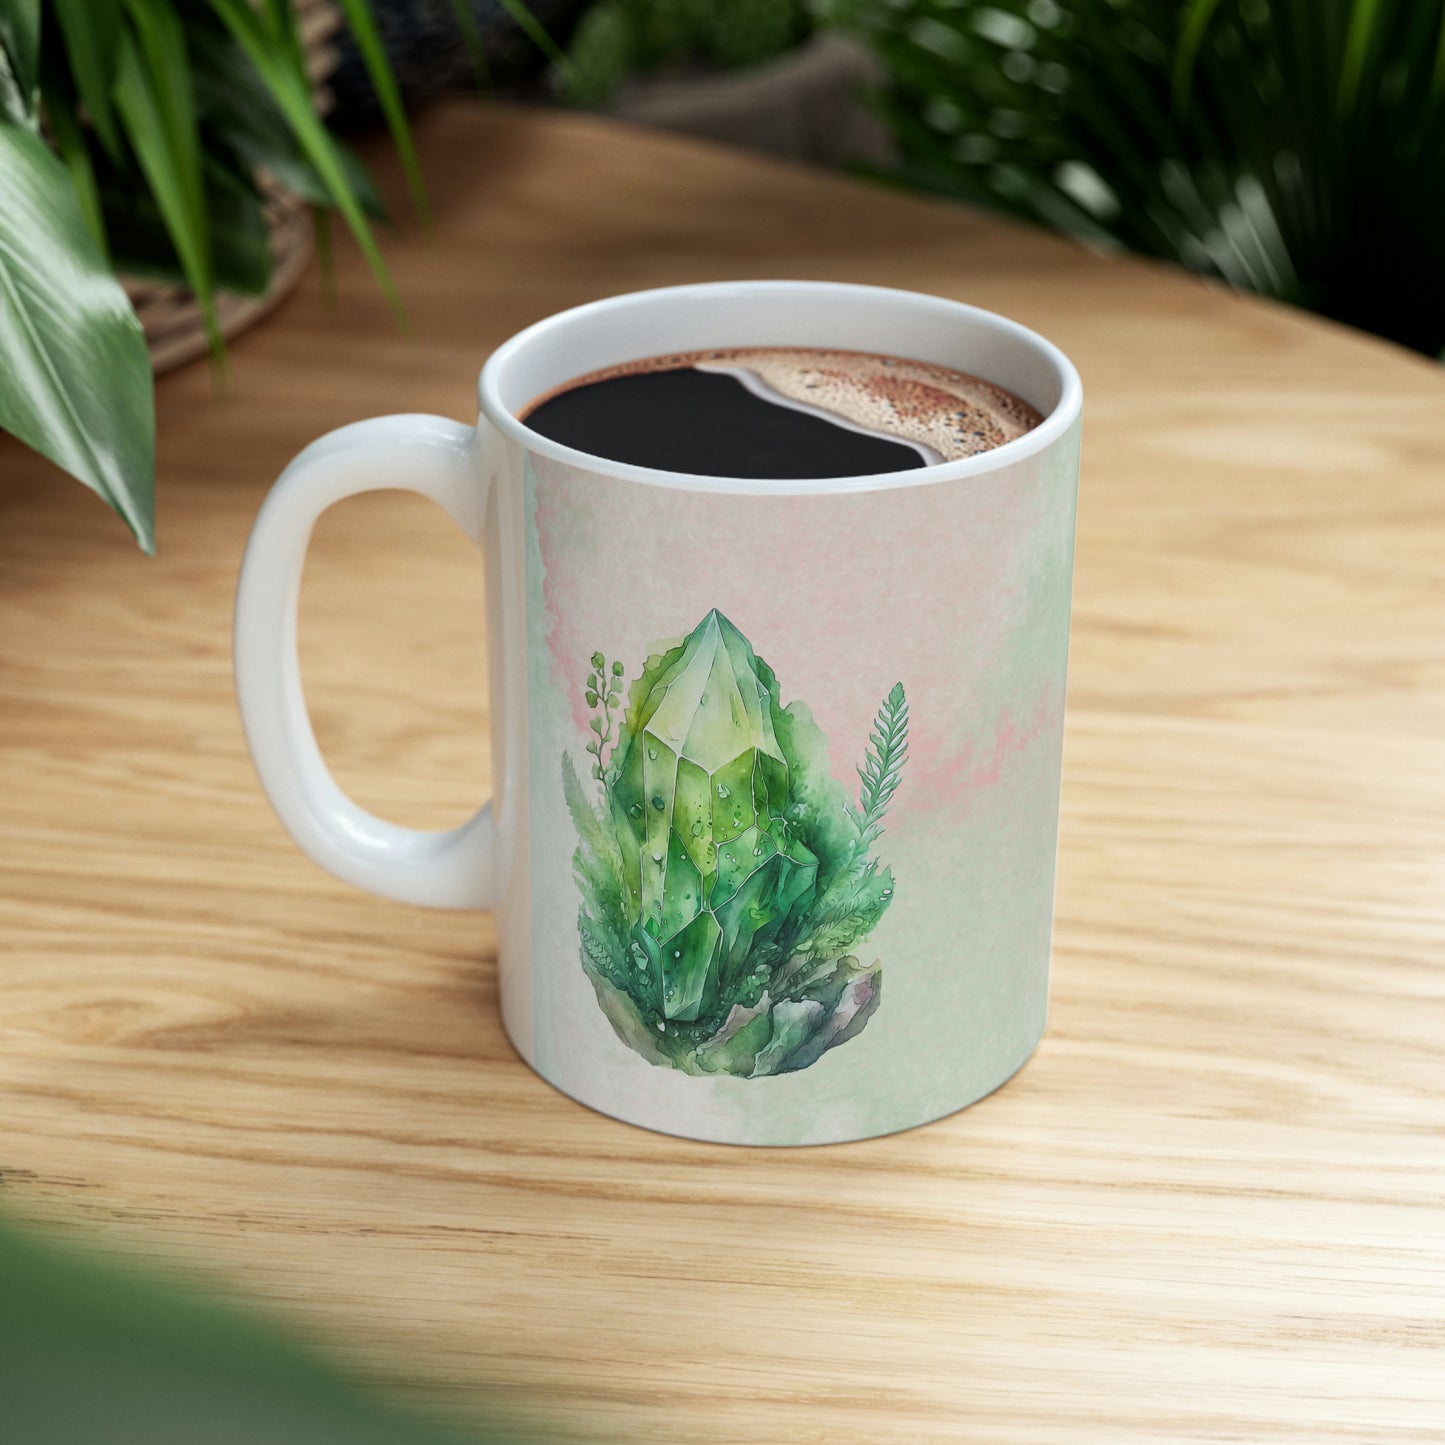 Green Crystal with Plants Watercolor Ceramic Mug 11oz